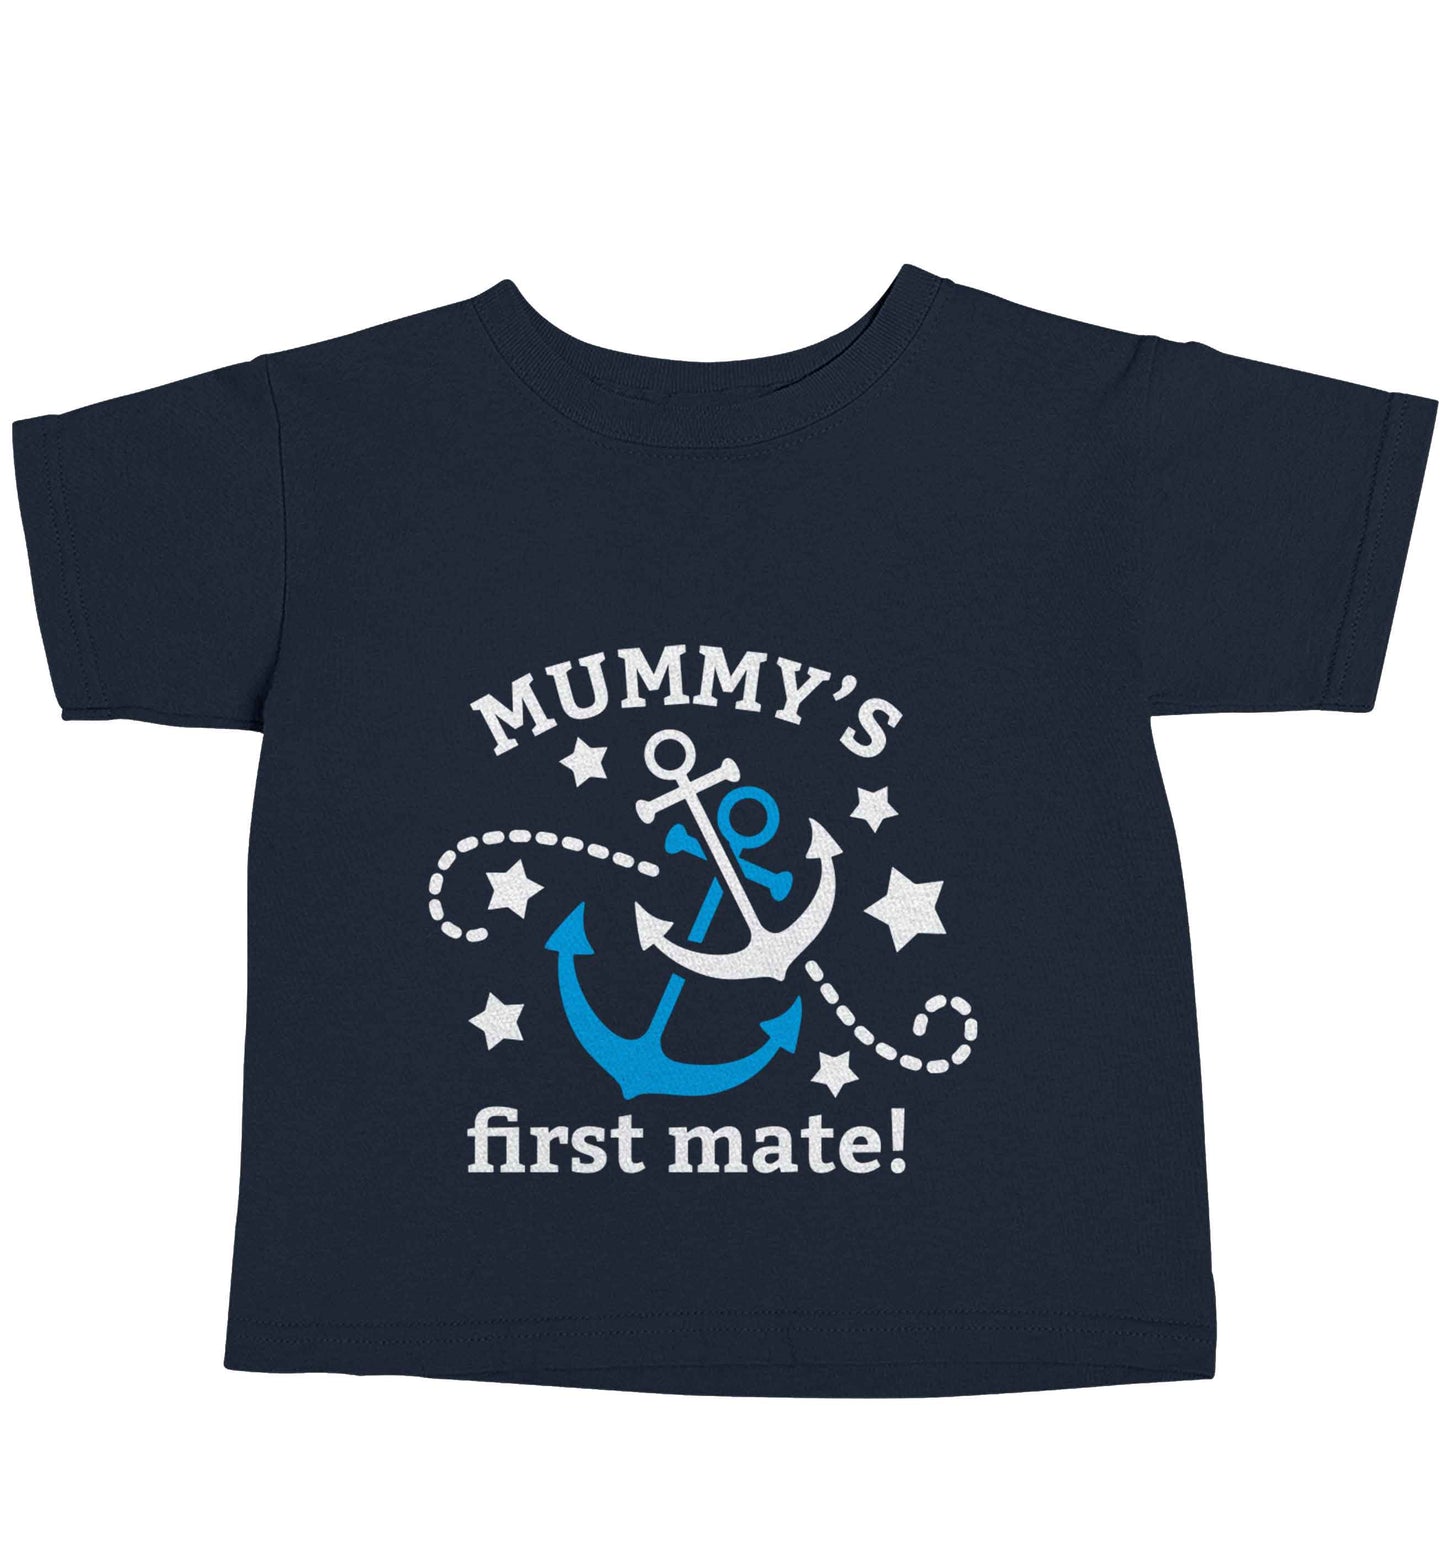 Mummy's First Mate navy baby toddler Tshirt 2 Years